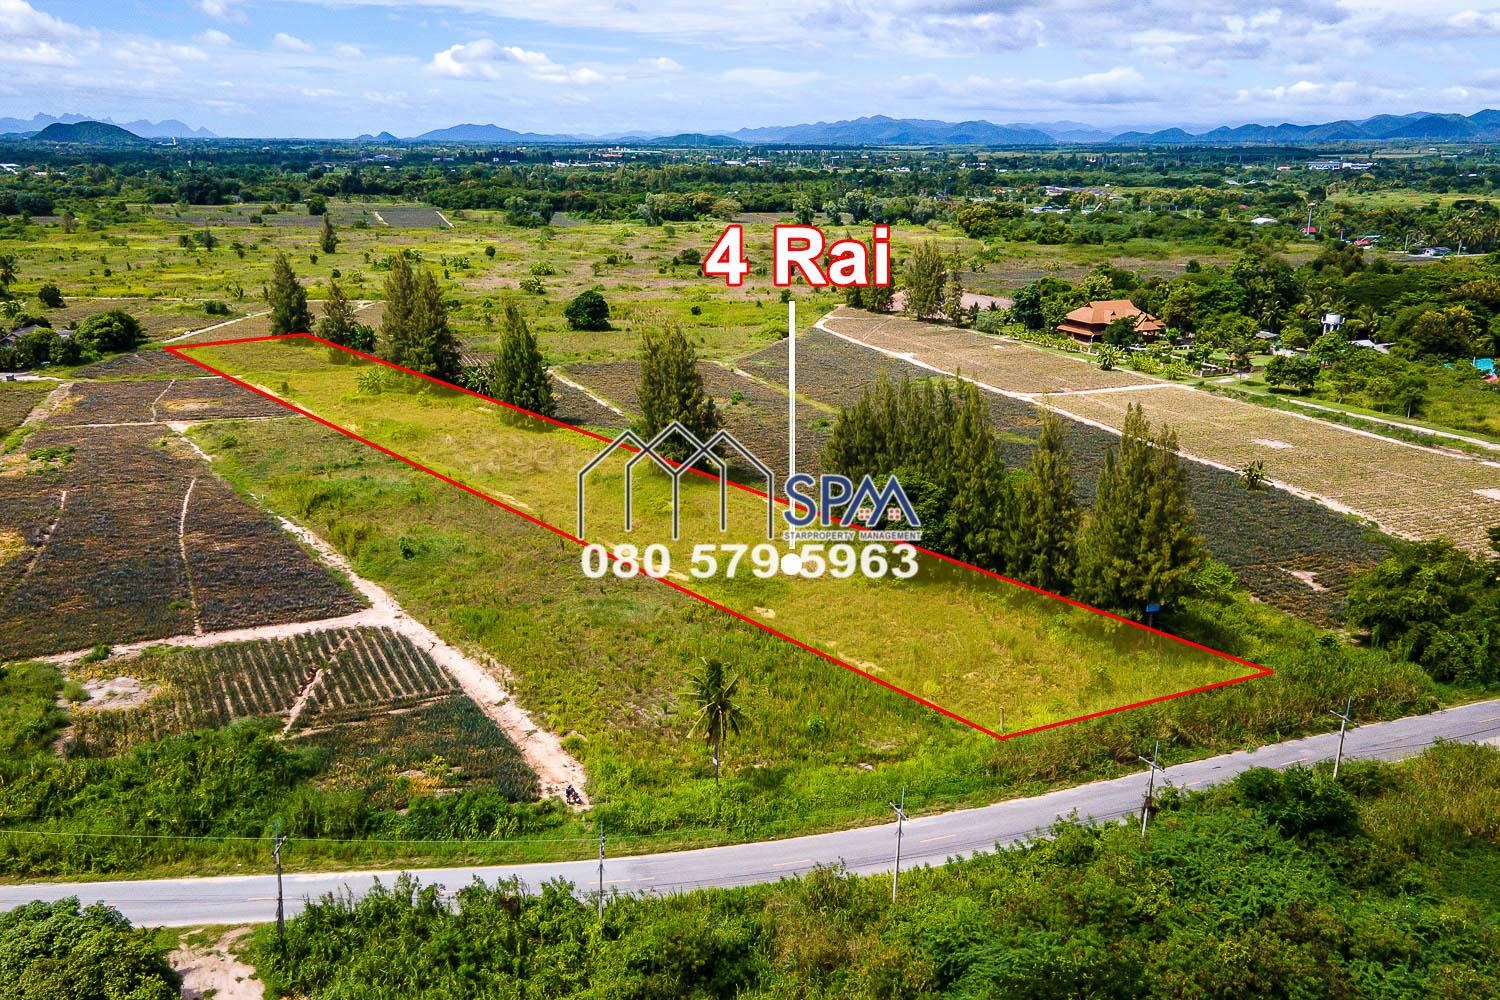 Land for sale near Black Mountain golf course, Land Area 4 Rai (6400 sq.m) Price 1,625,000 Baht per Rai